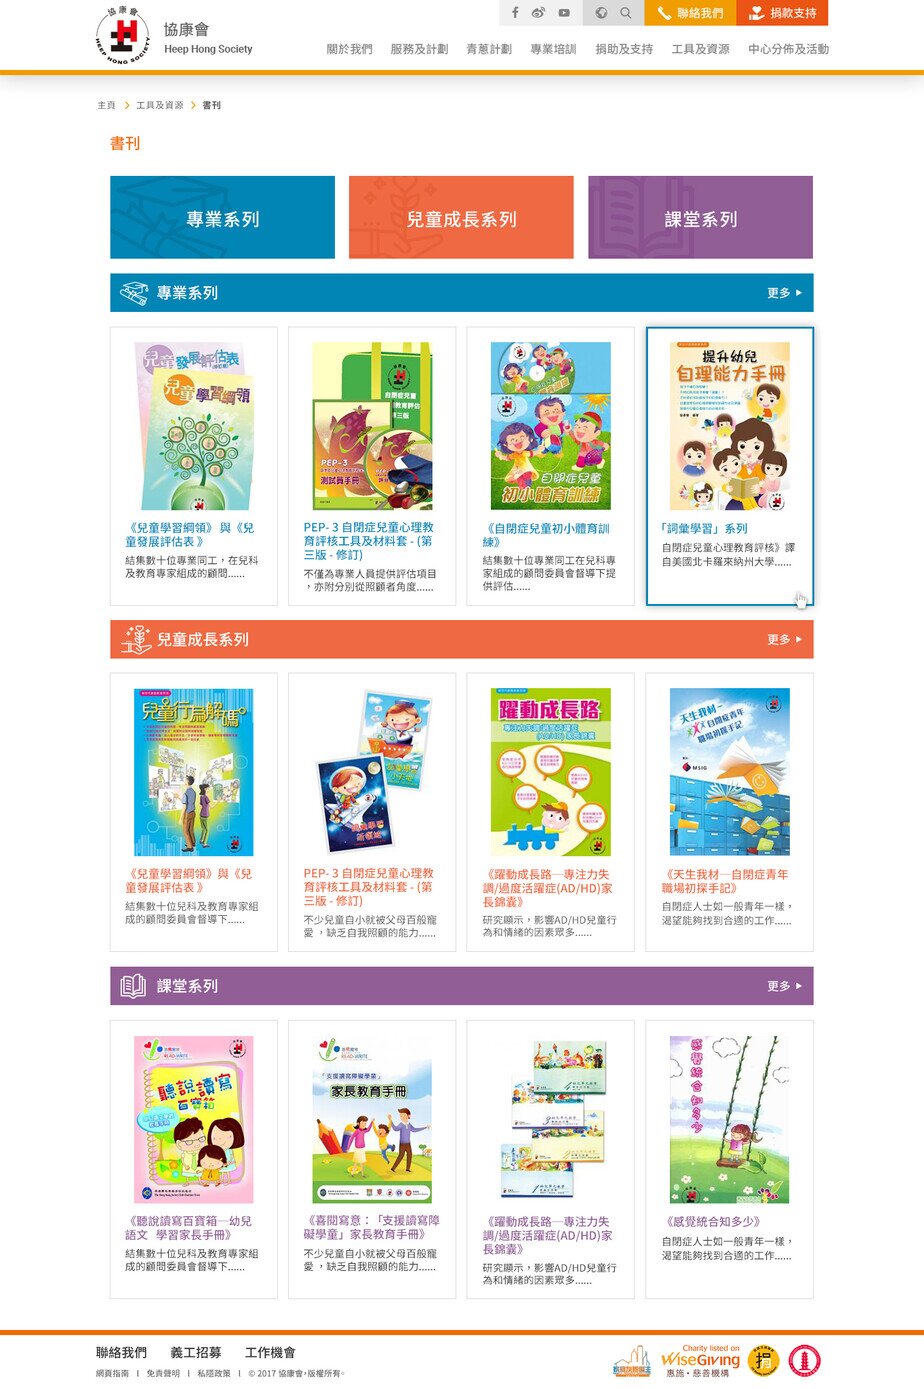 Heep Hong Society website screenshot for desktop version 5 of 6